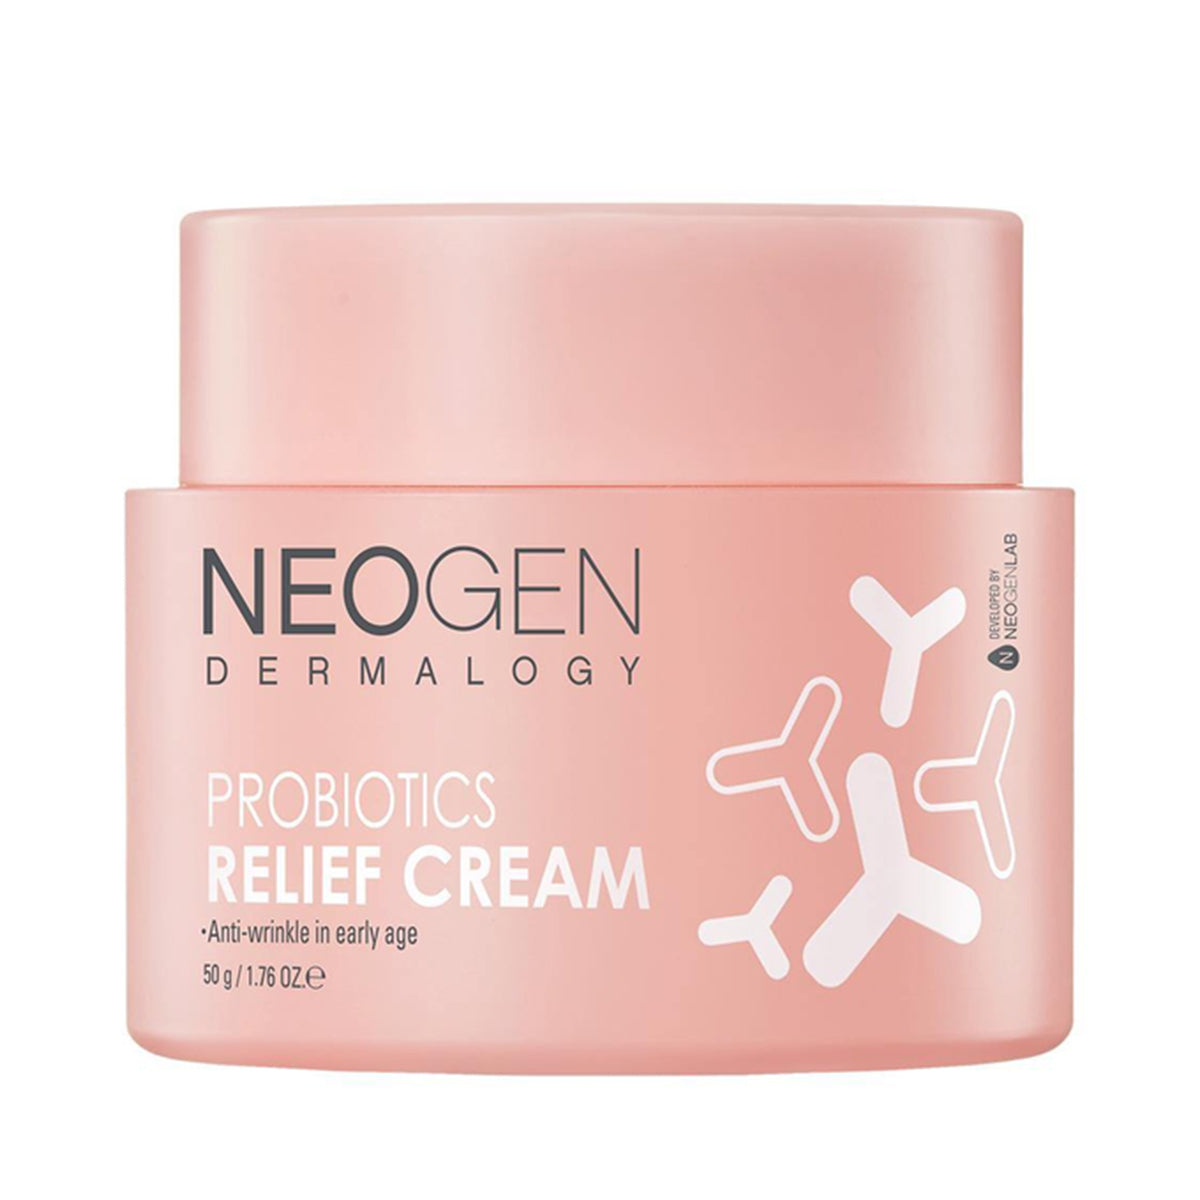 NEOGEN - Probiotics Relief Cream - 50g